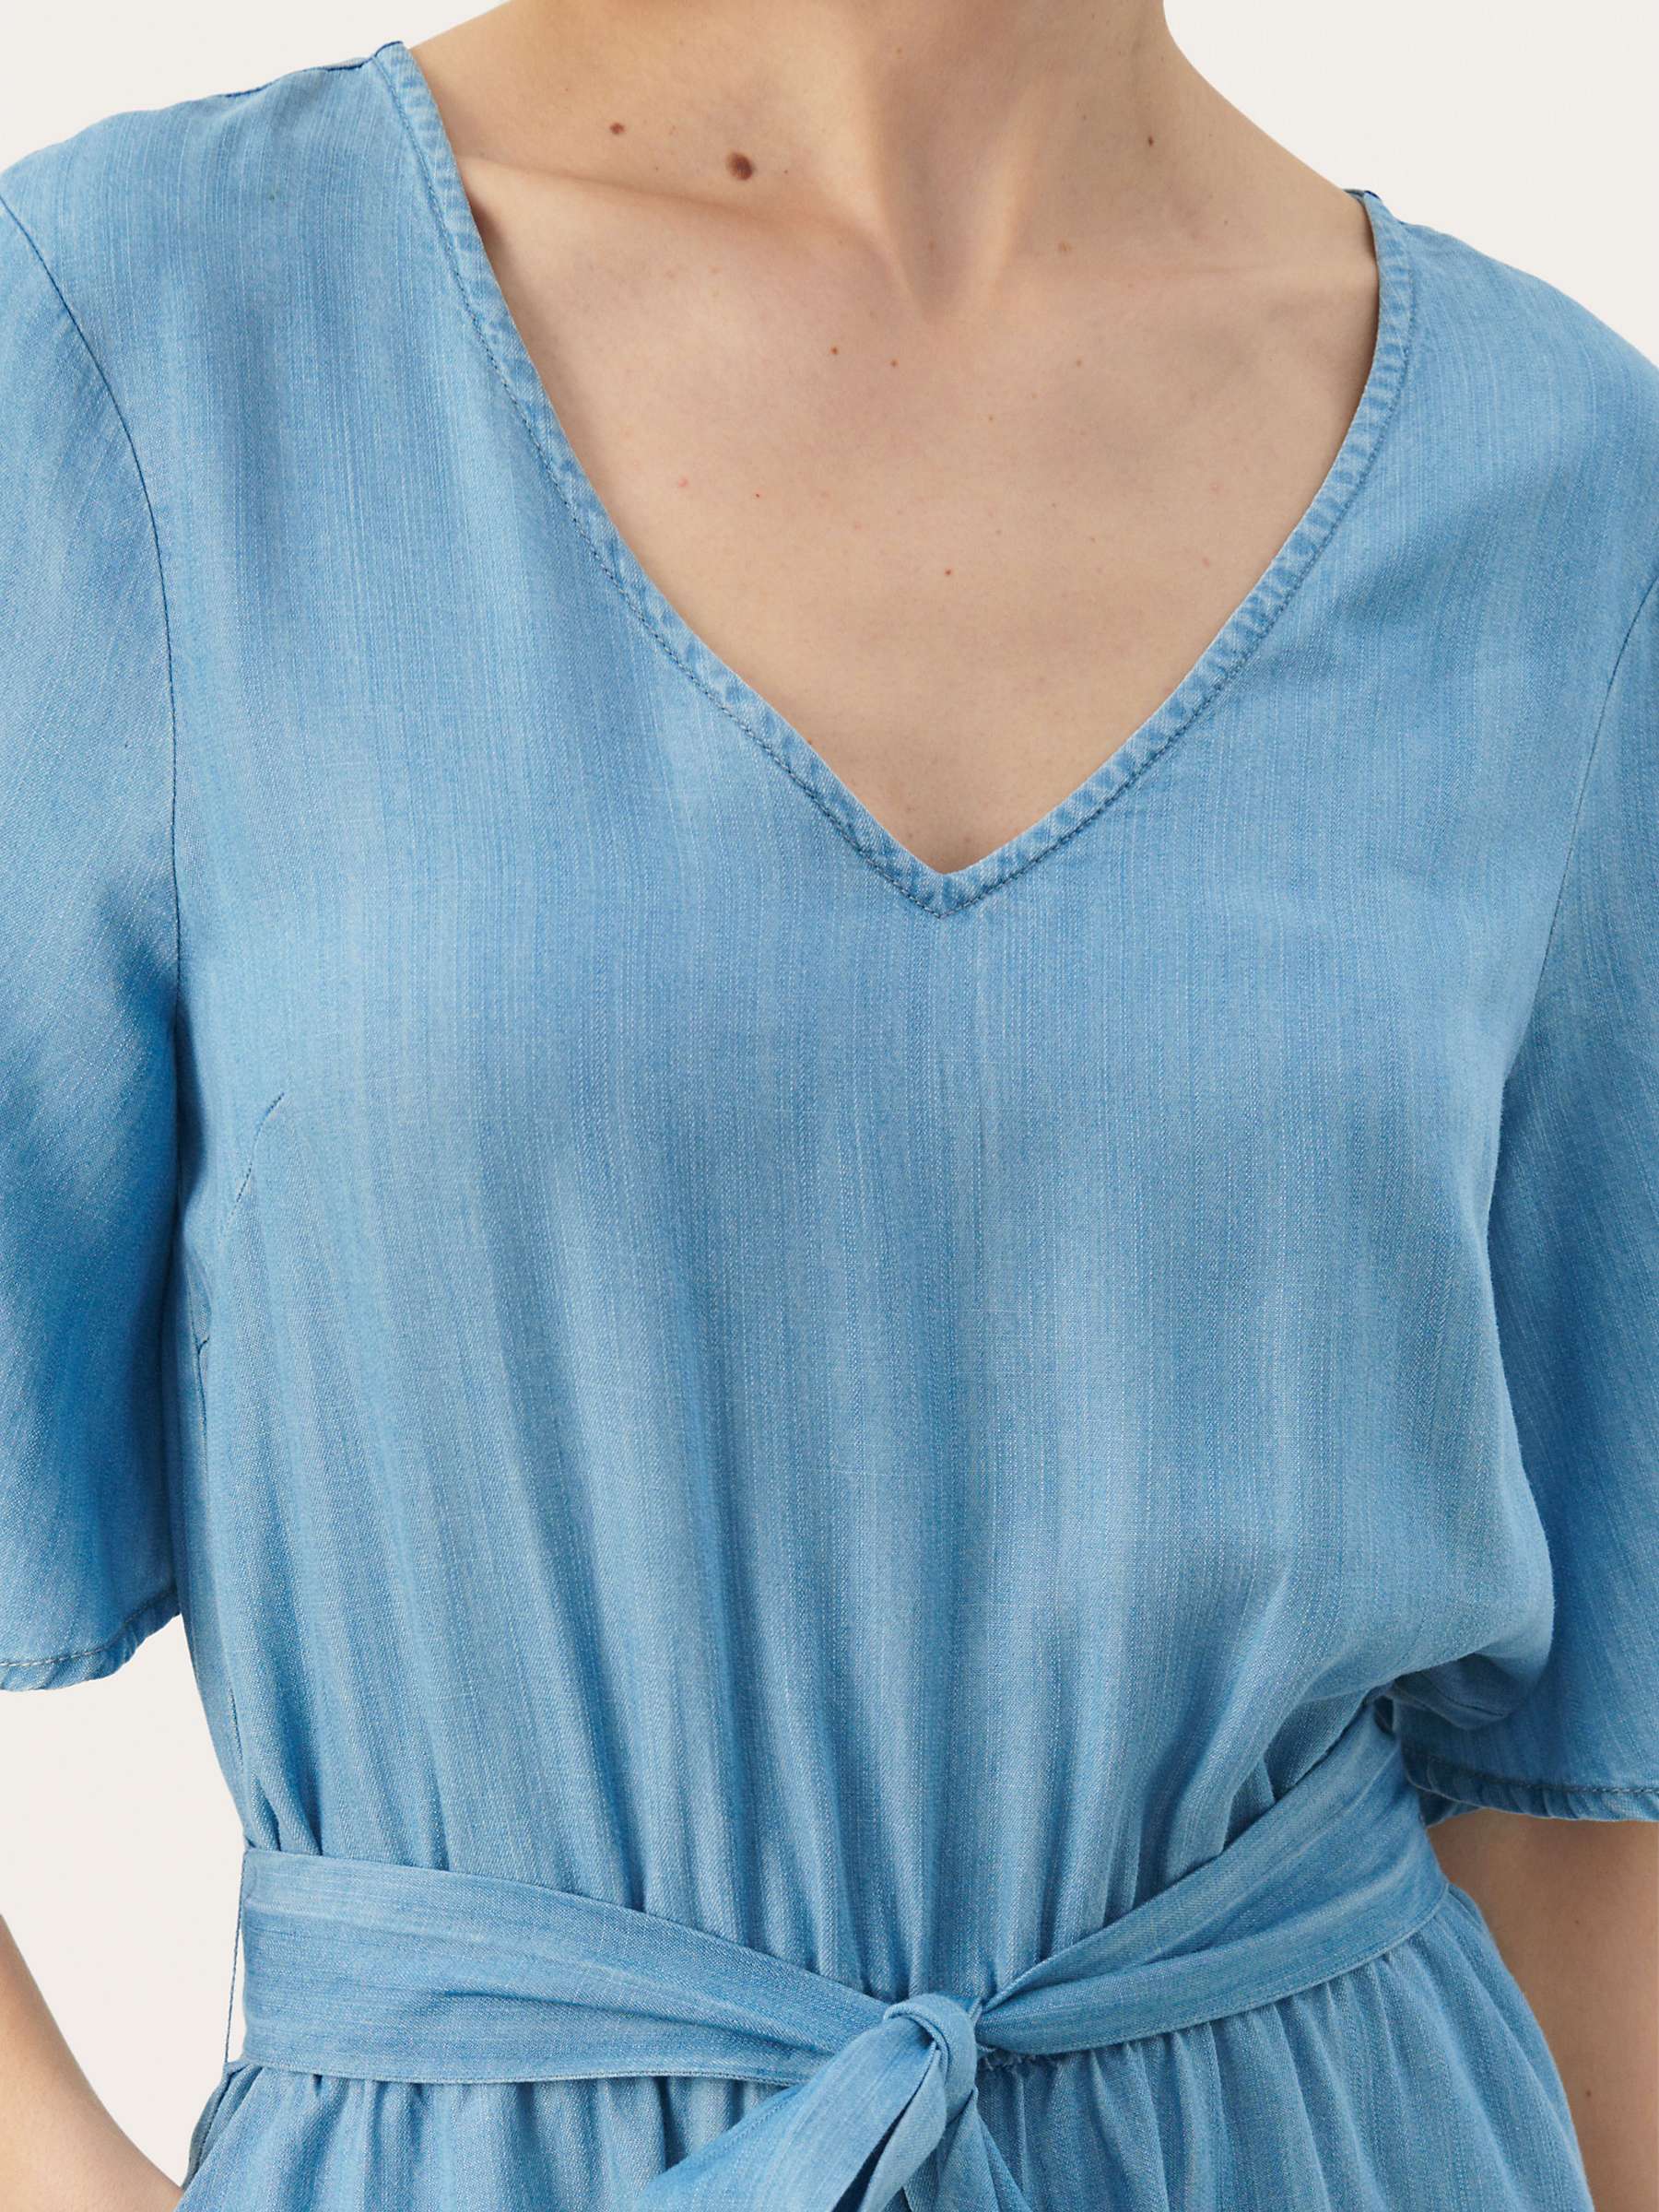 Buy Part Two Adrienne Half Sleeve Belted Jumpsuit, Medium Blue Online at johnlewis.com